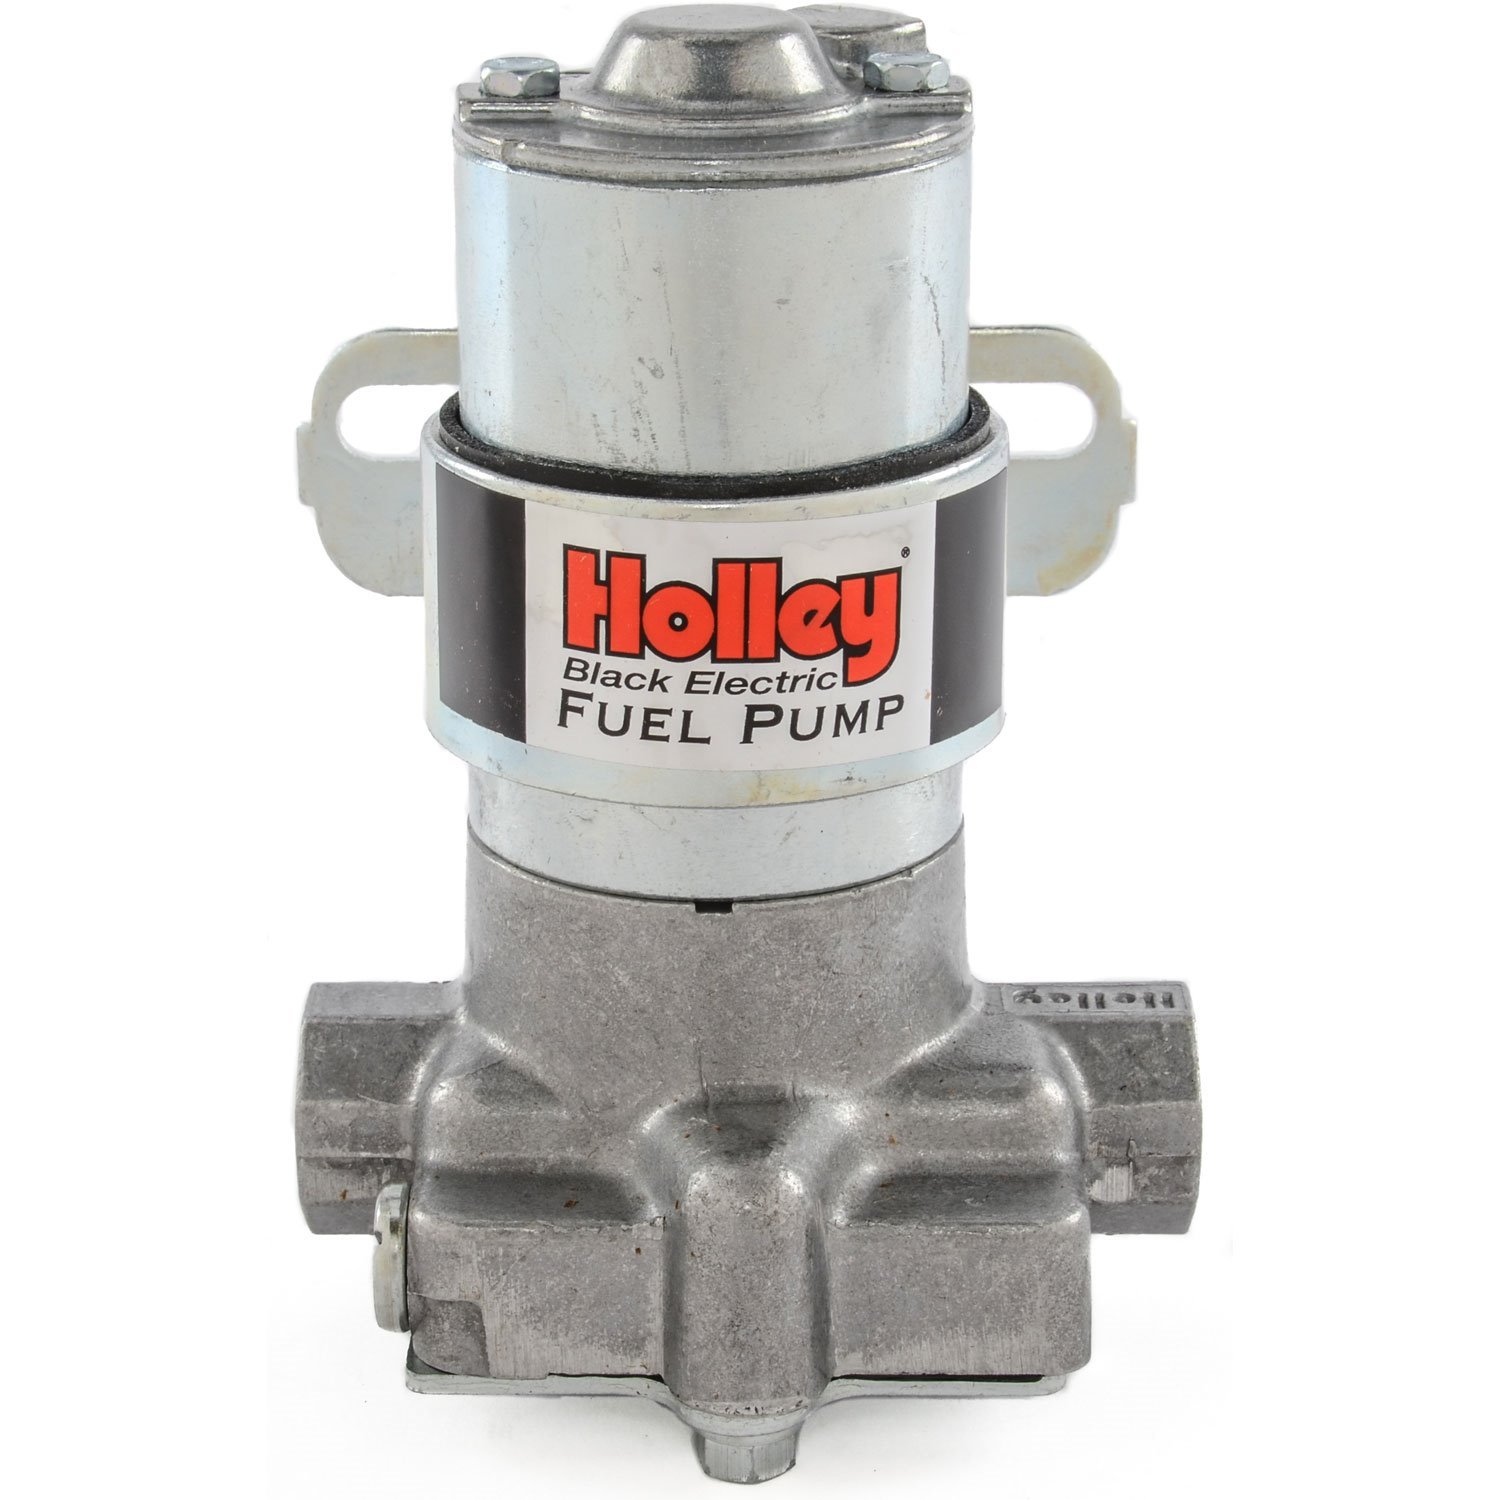 Holley Red Fuel Pump Vs Carter - Risala Blog